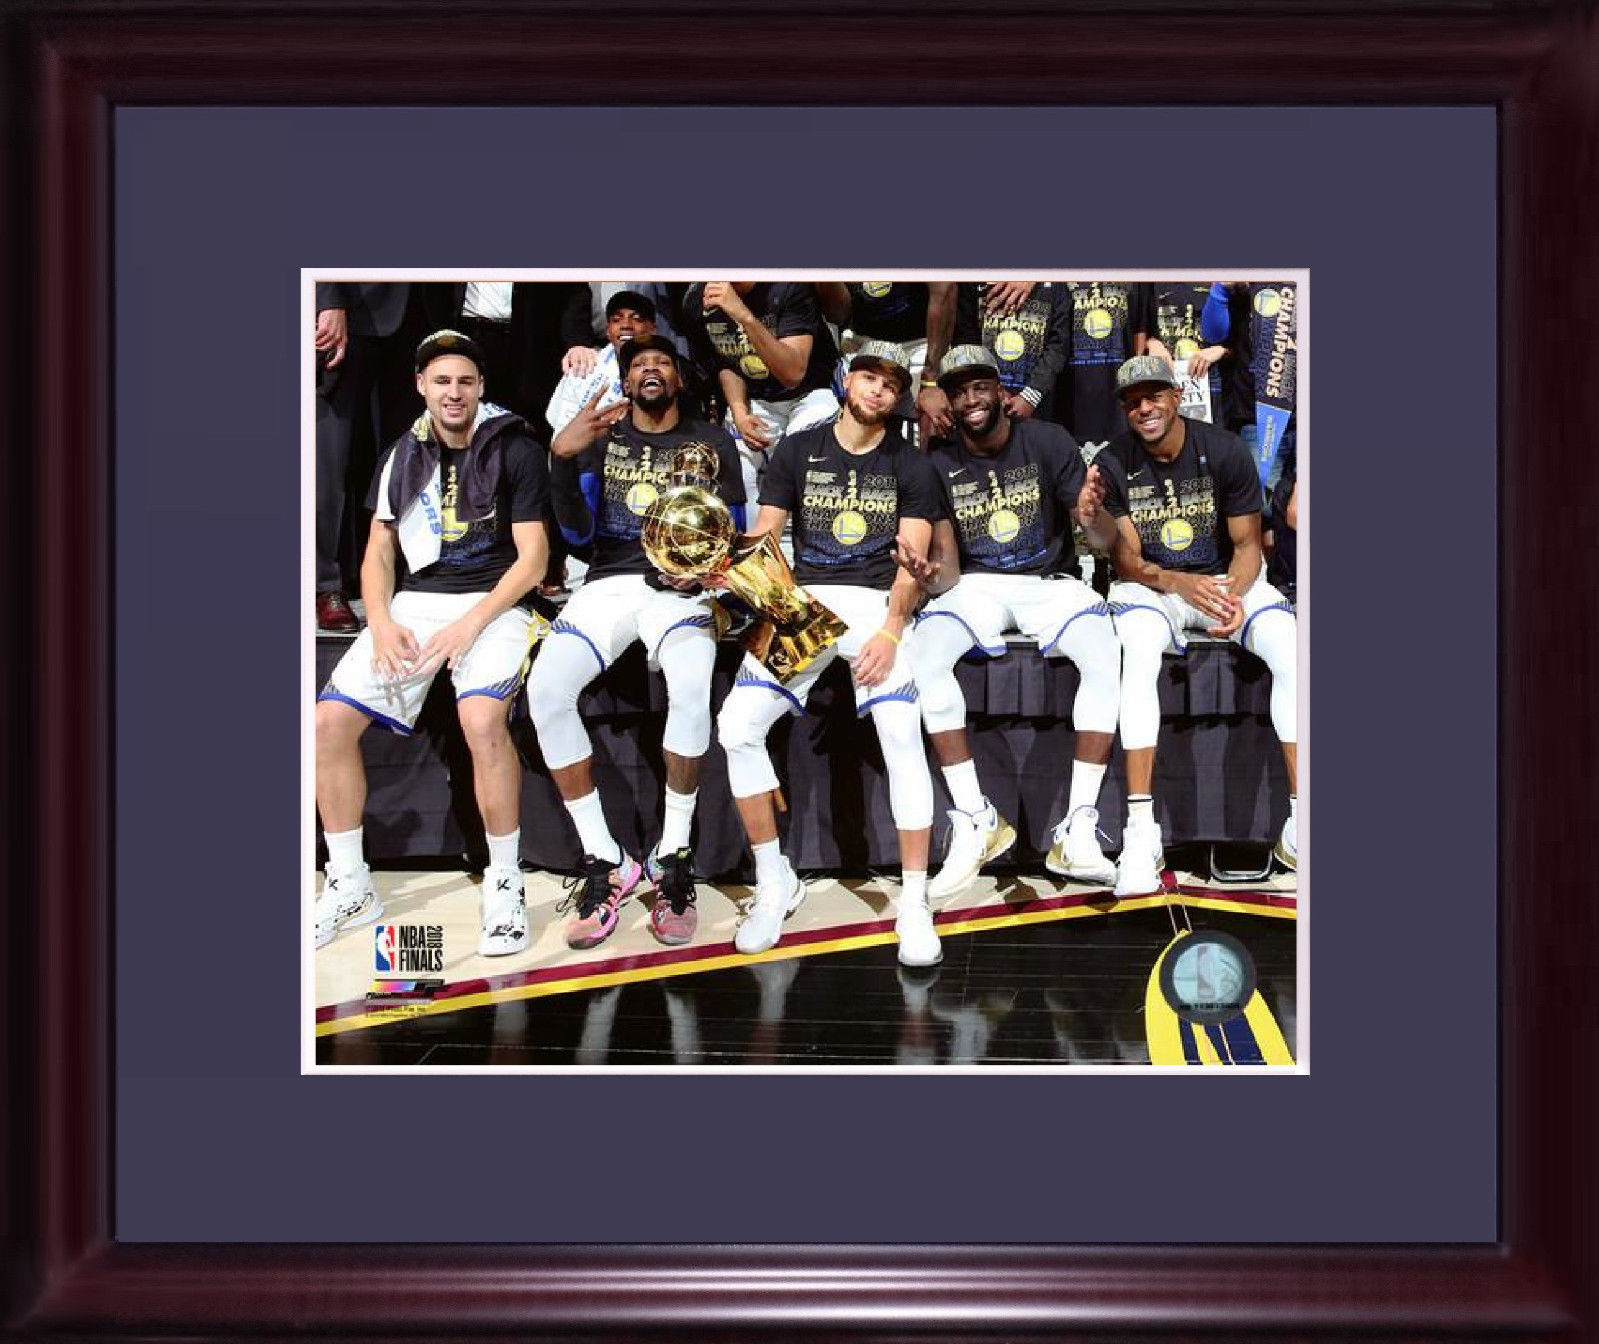 2018 Golden State Warriors NBA Champions Licensed Hologram framed 8×10 photo